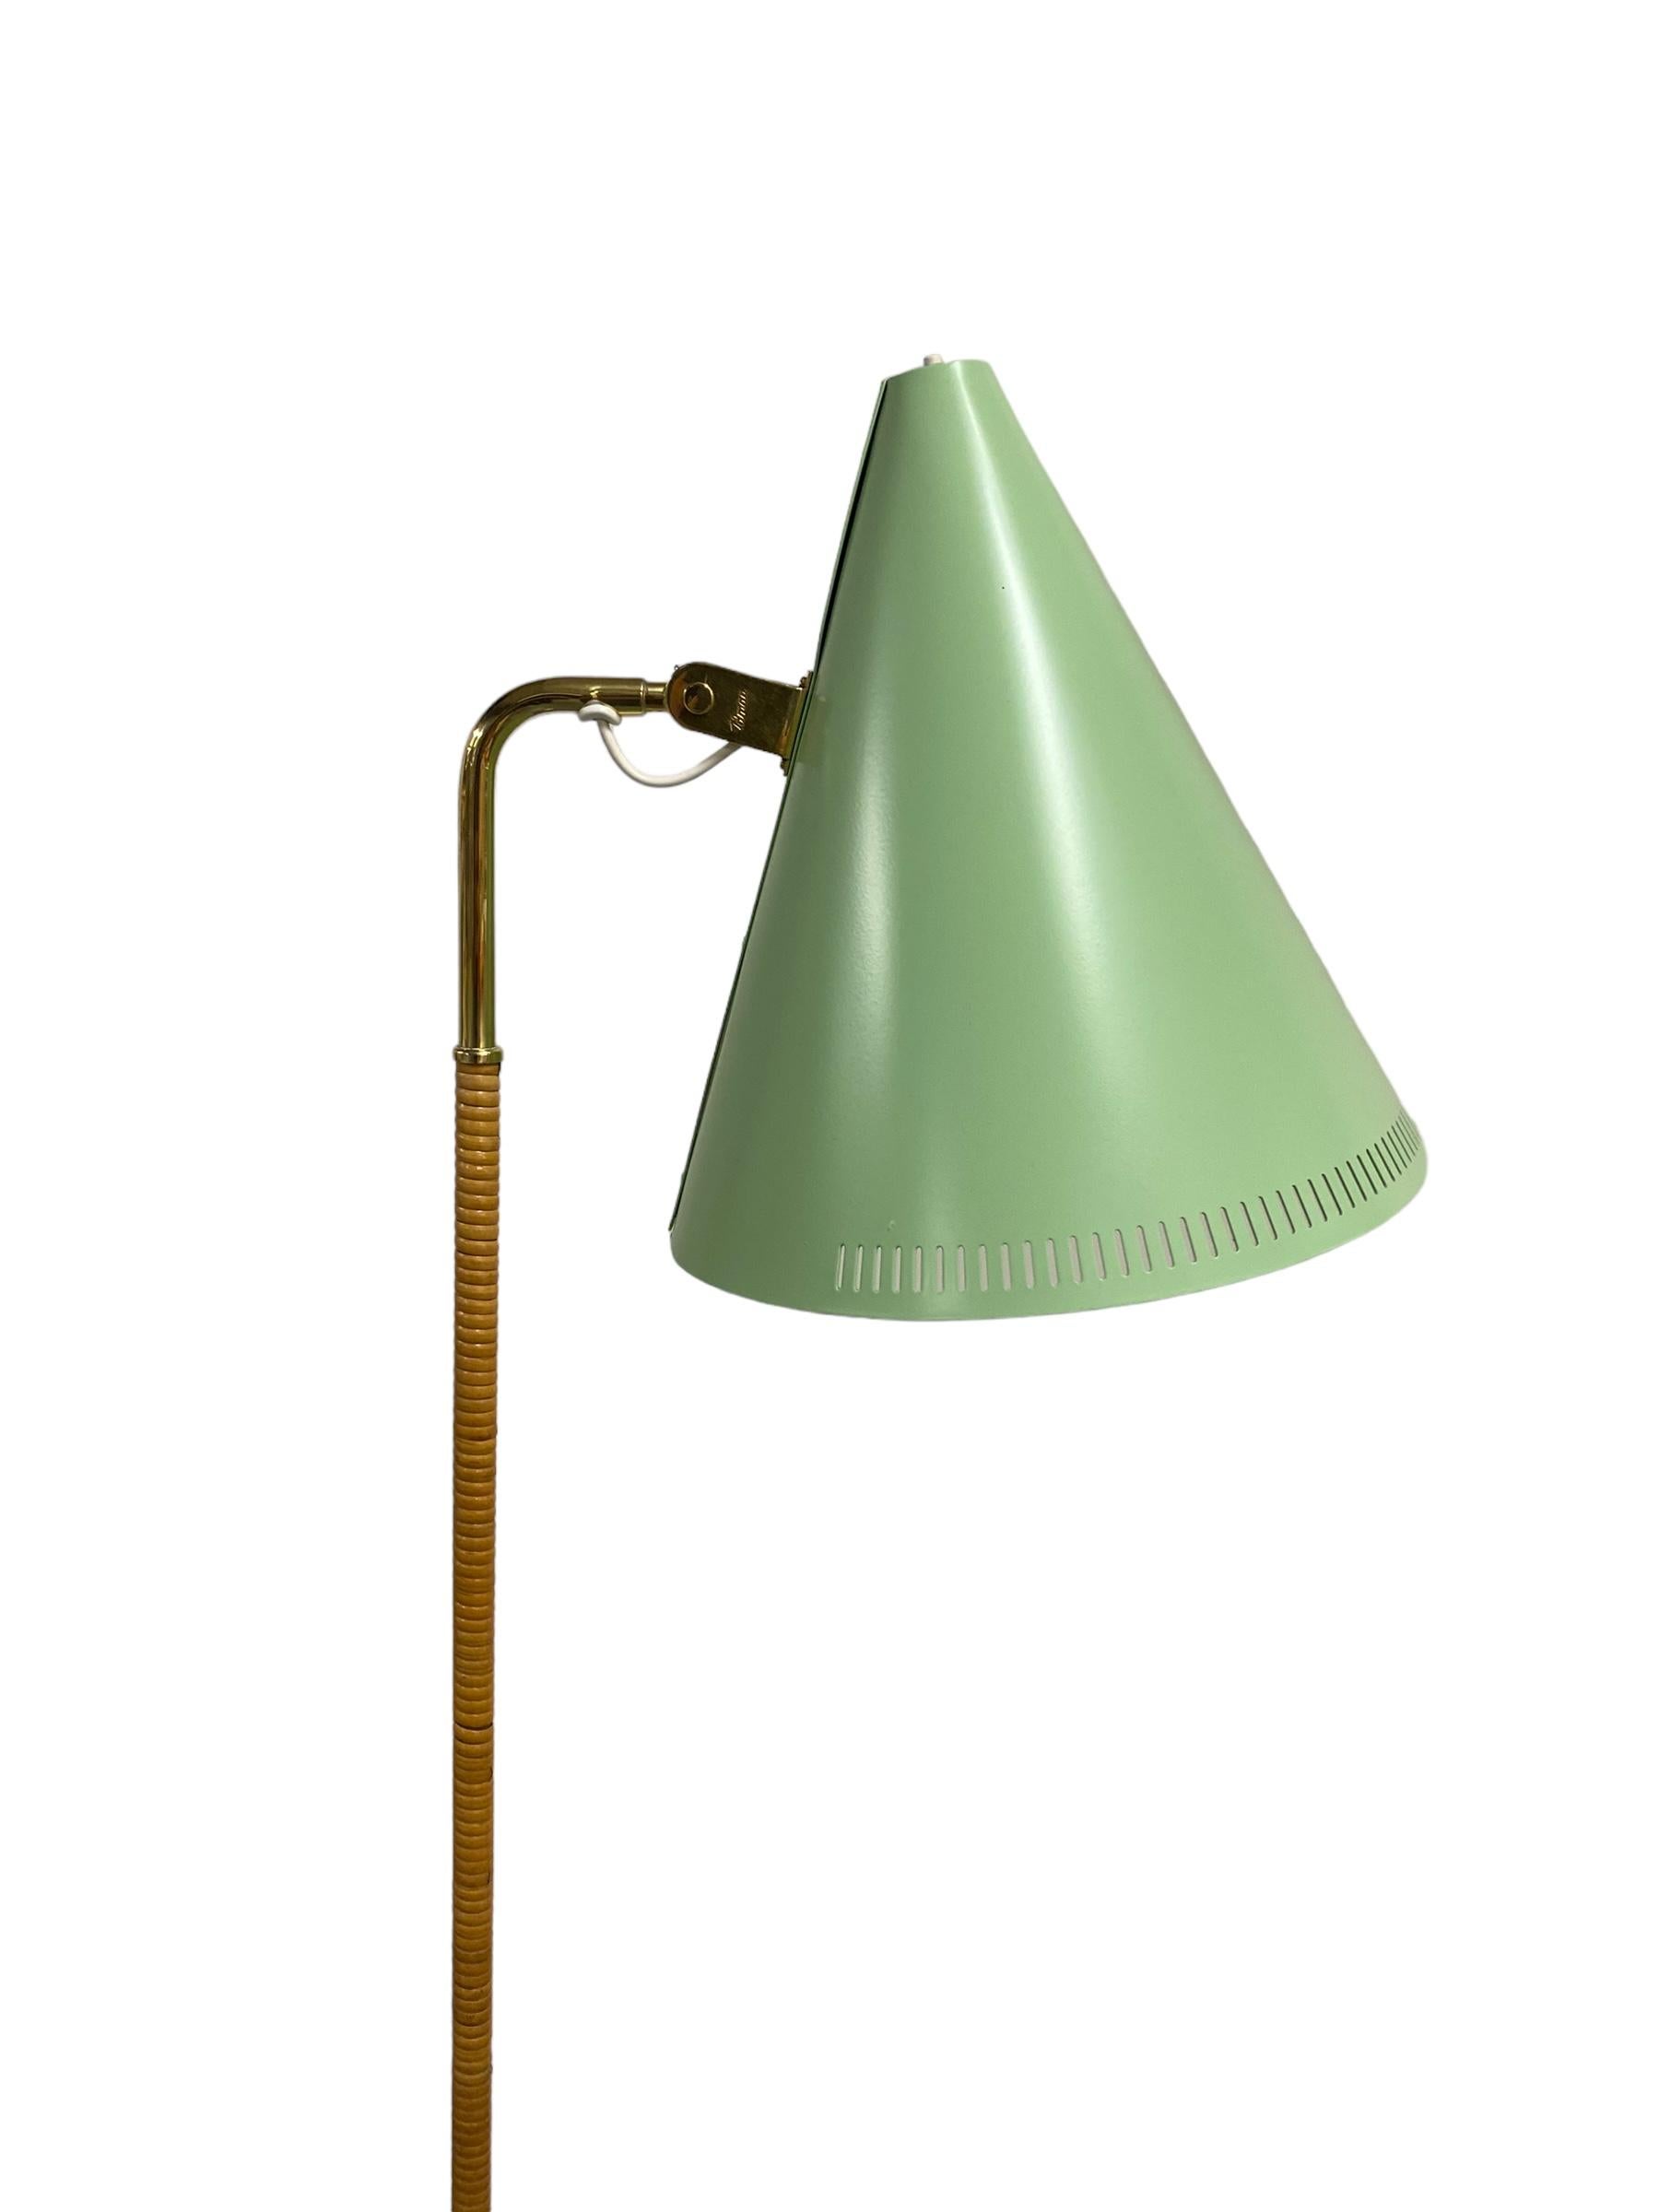 Finnish Paavo Tynell Floor Lamp Model K10-10, Idman Oy For Sale